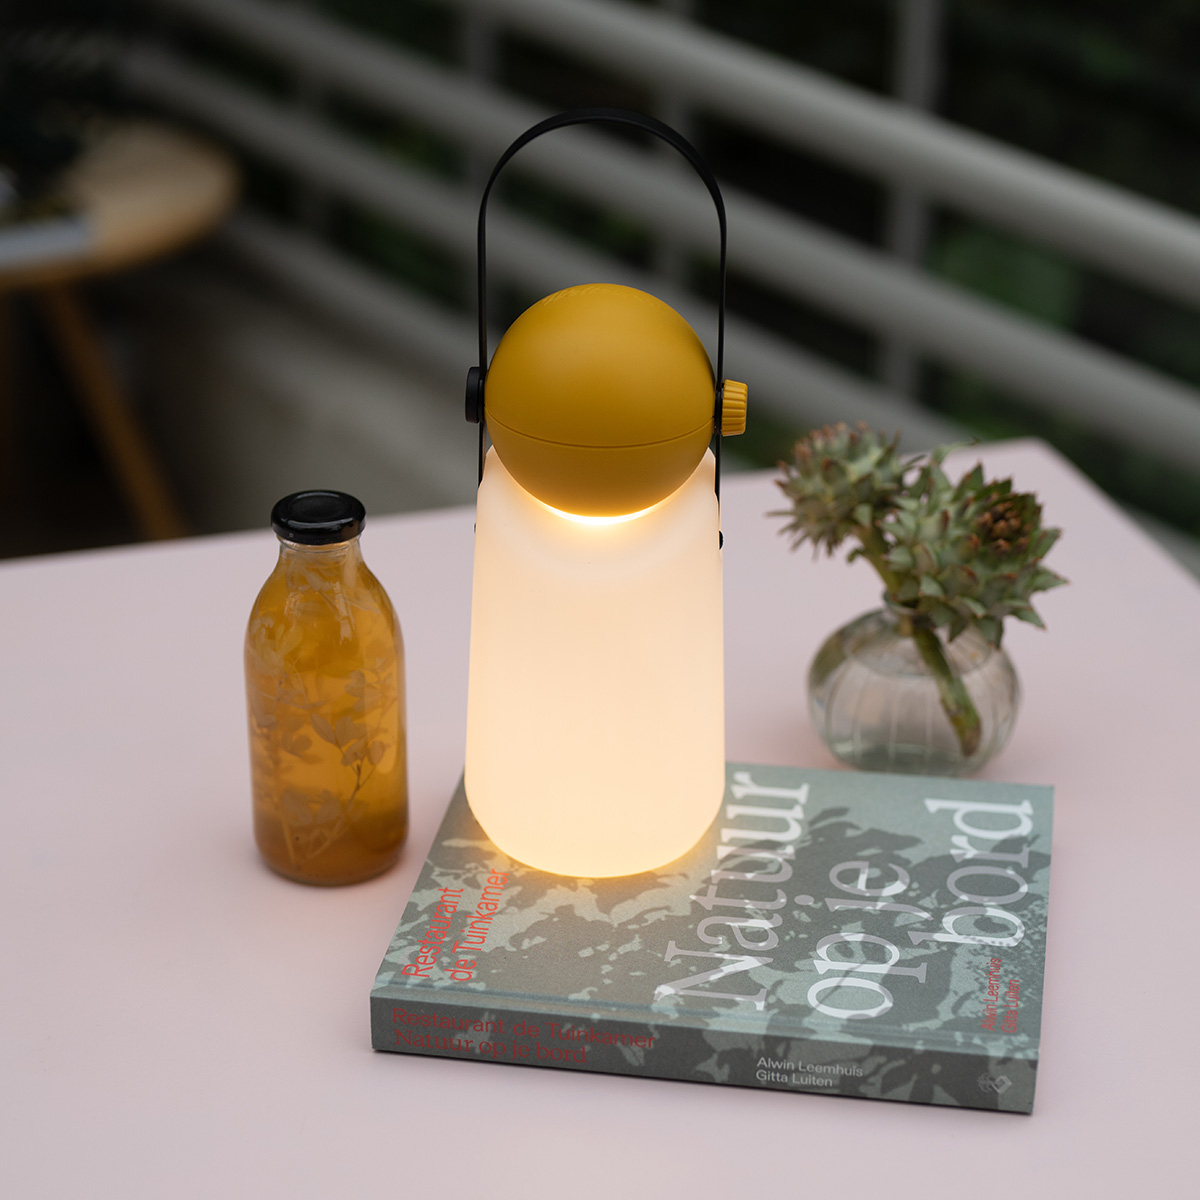 Weltevree Guidelight Golden Yellow, a portable lantern